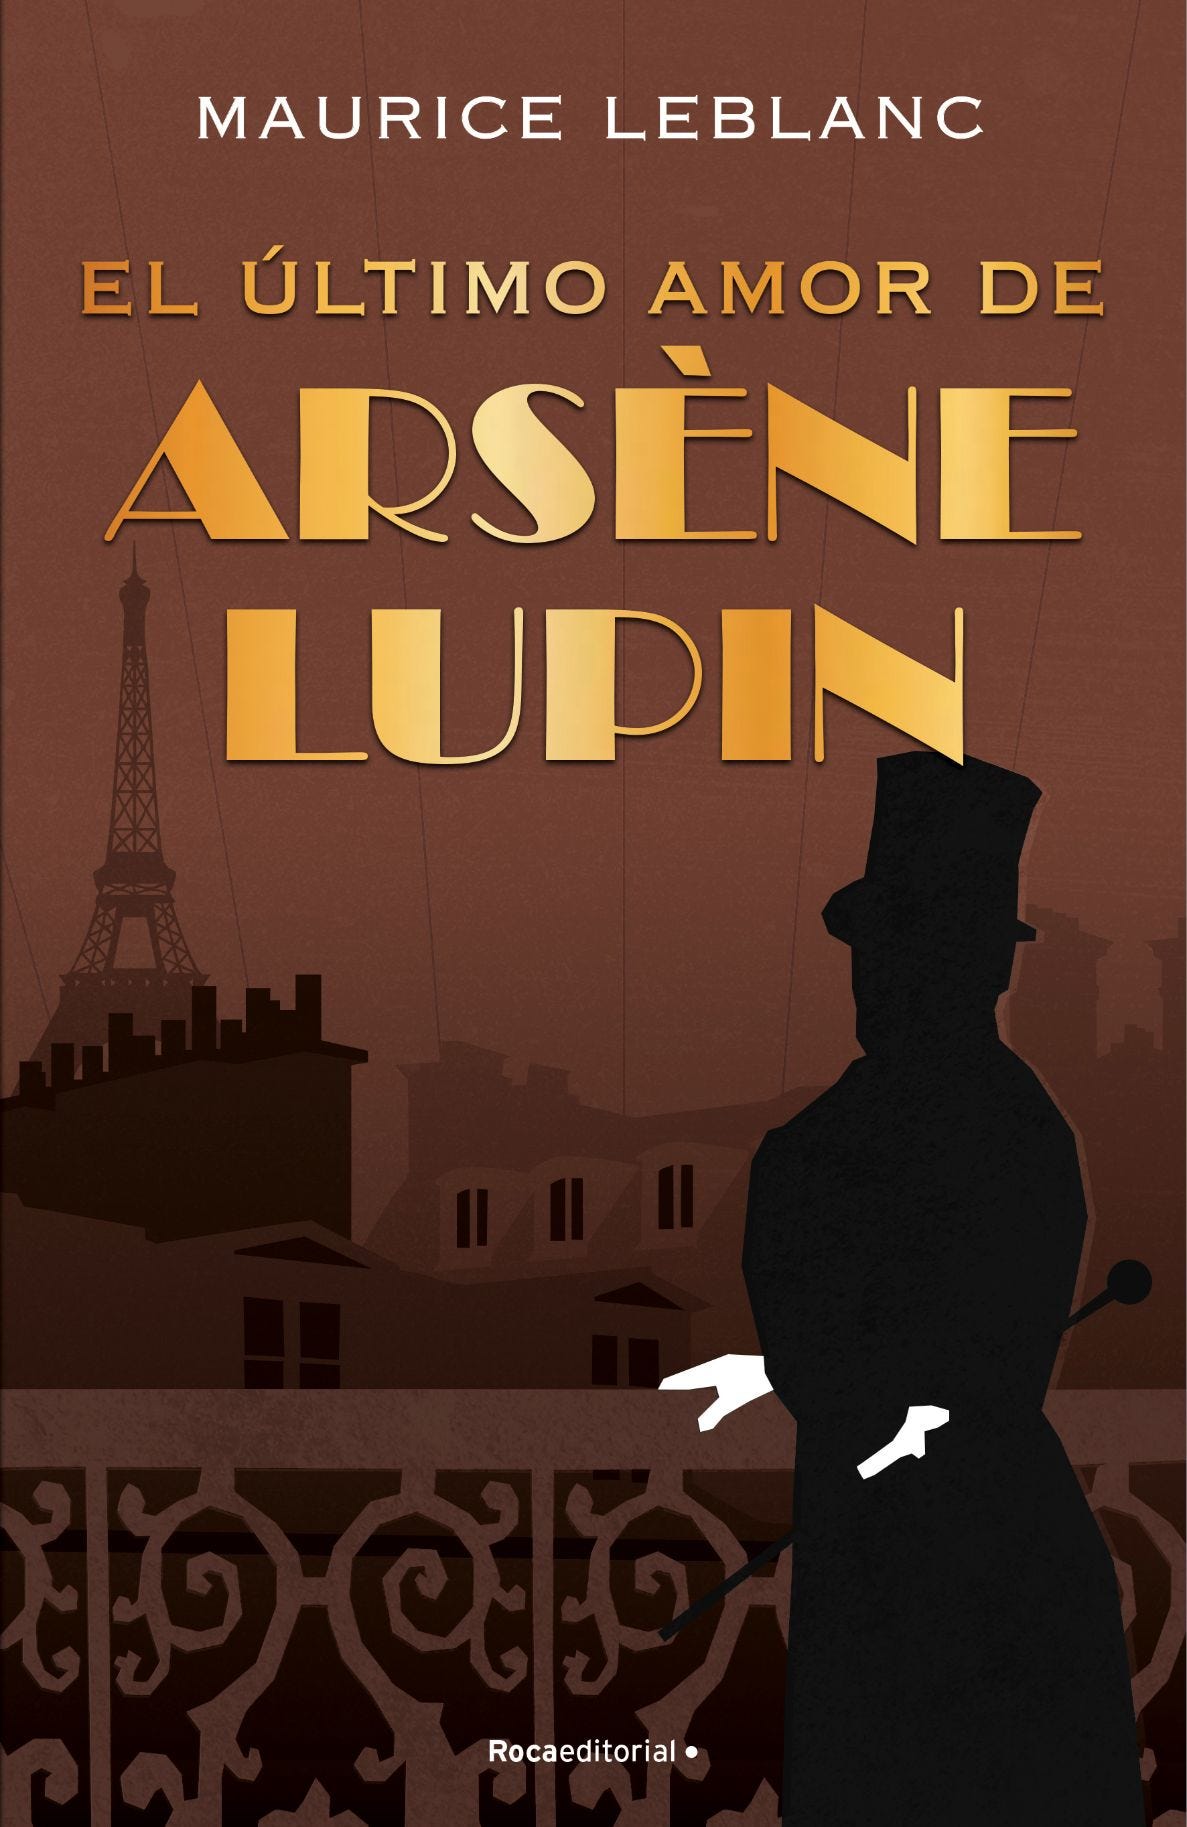 El Ultimo Amor De Arsene Lupin de LEBLANC, MAURICE